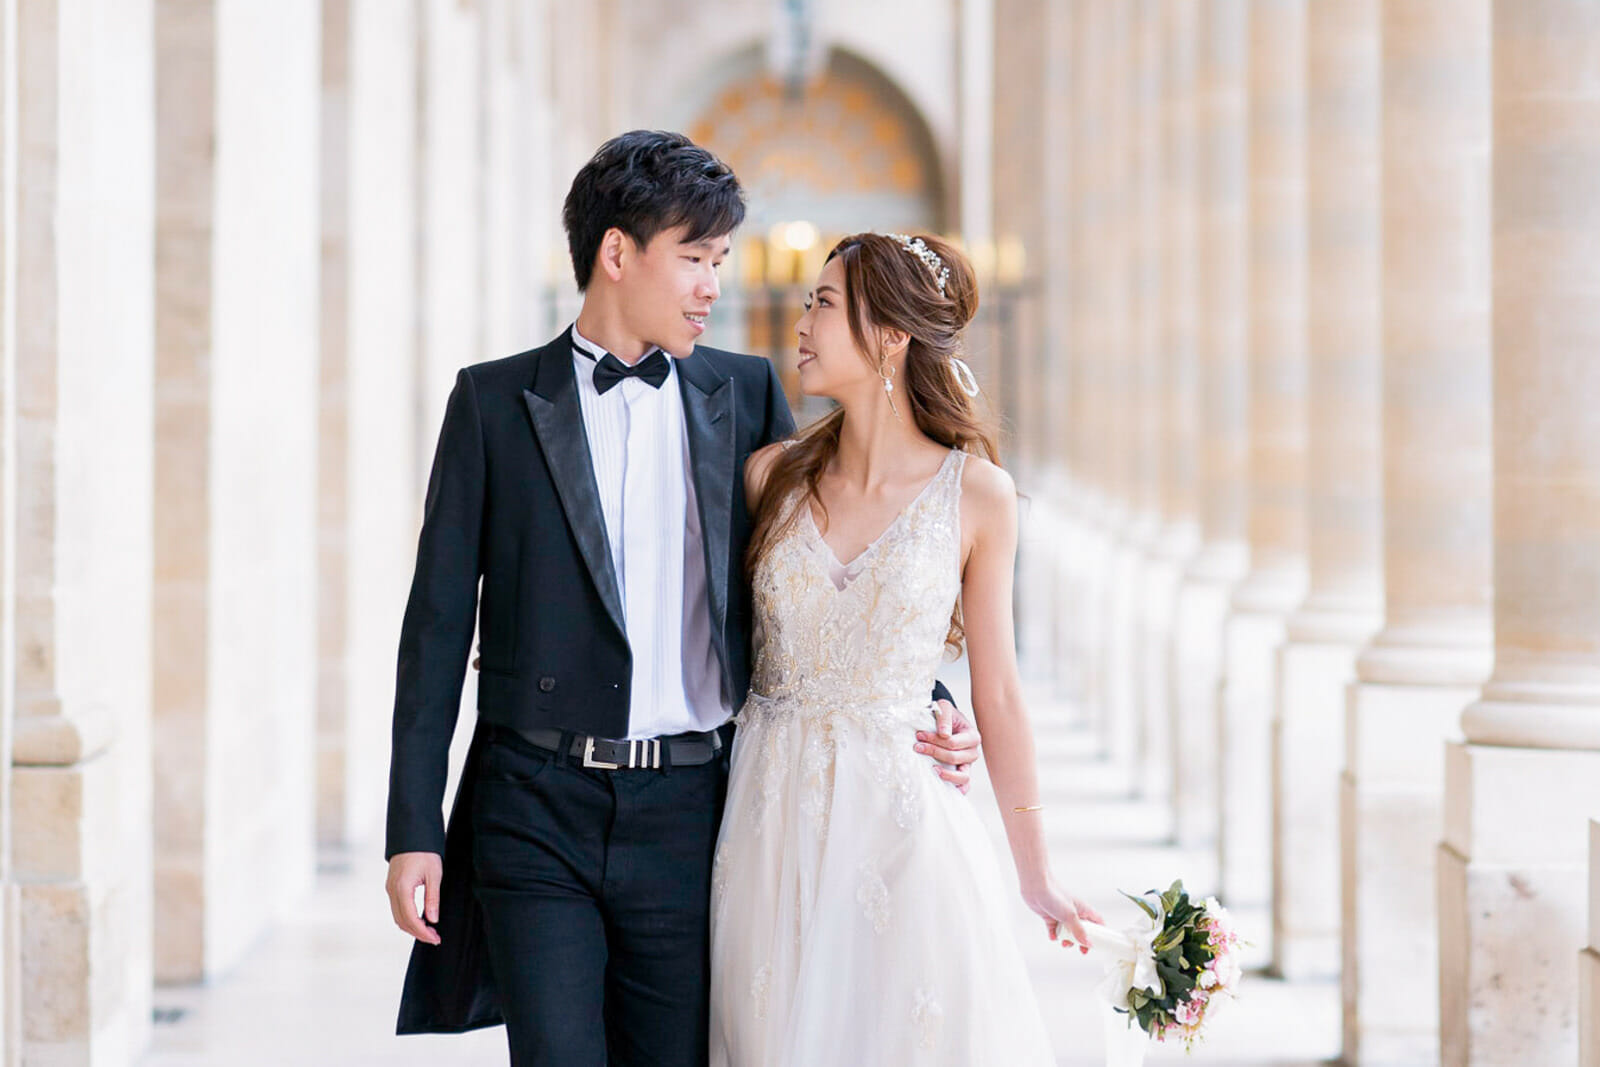 Dreamy pre-wedding Paris photos with flower bouquet at Palais Royal